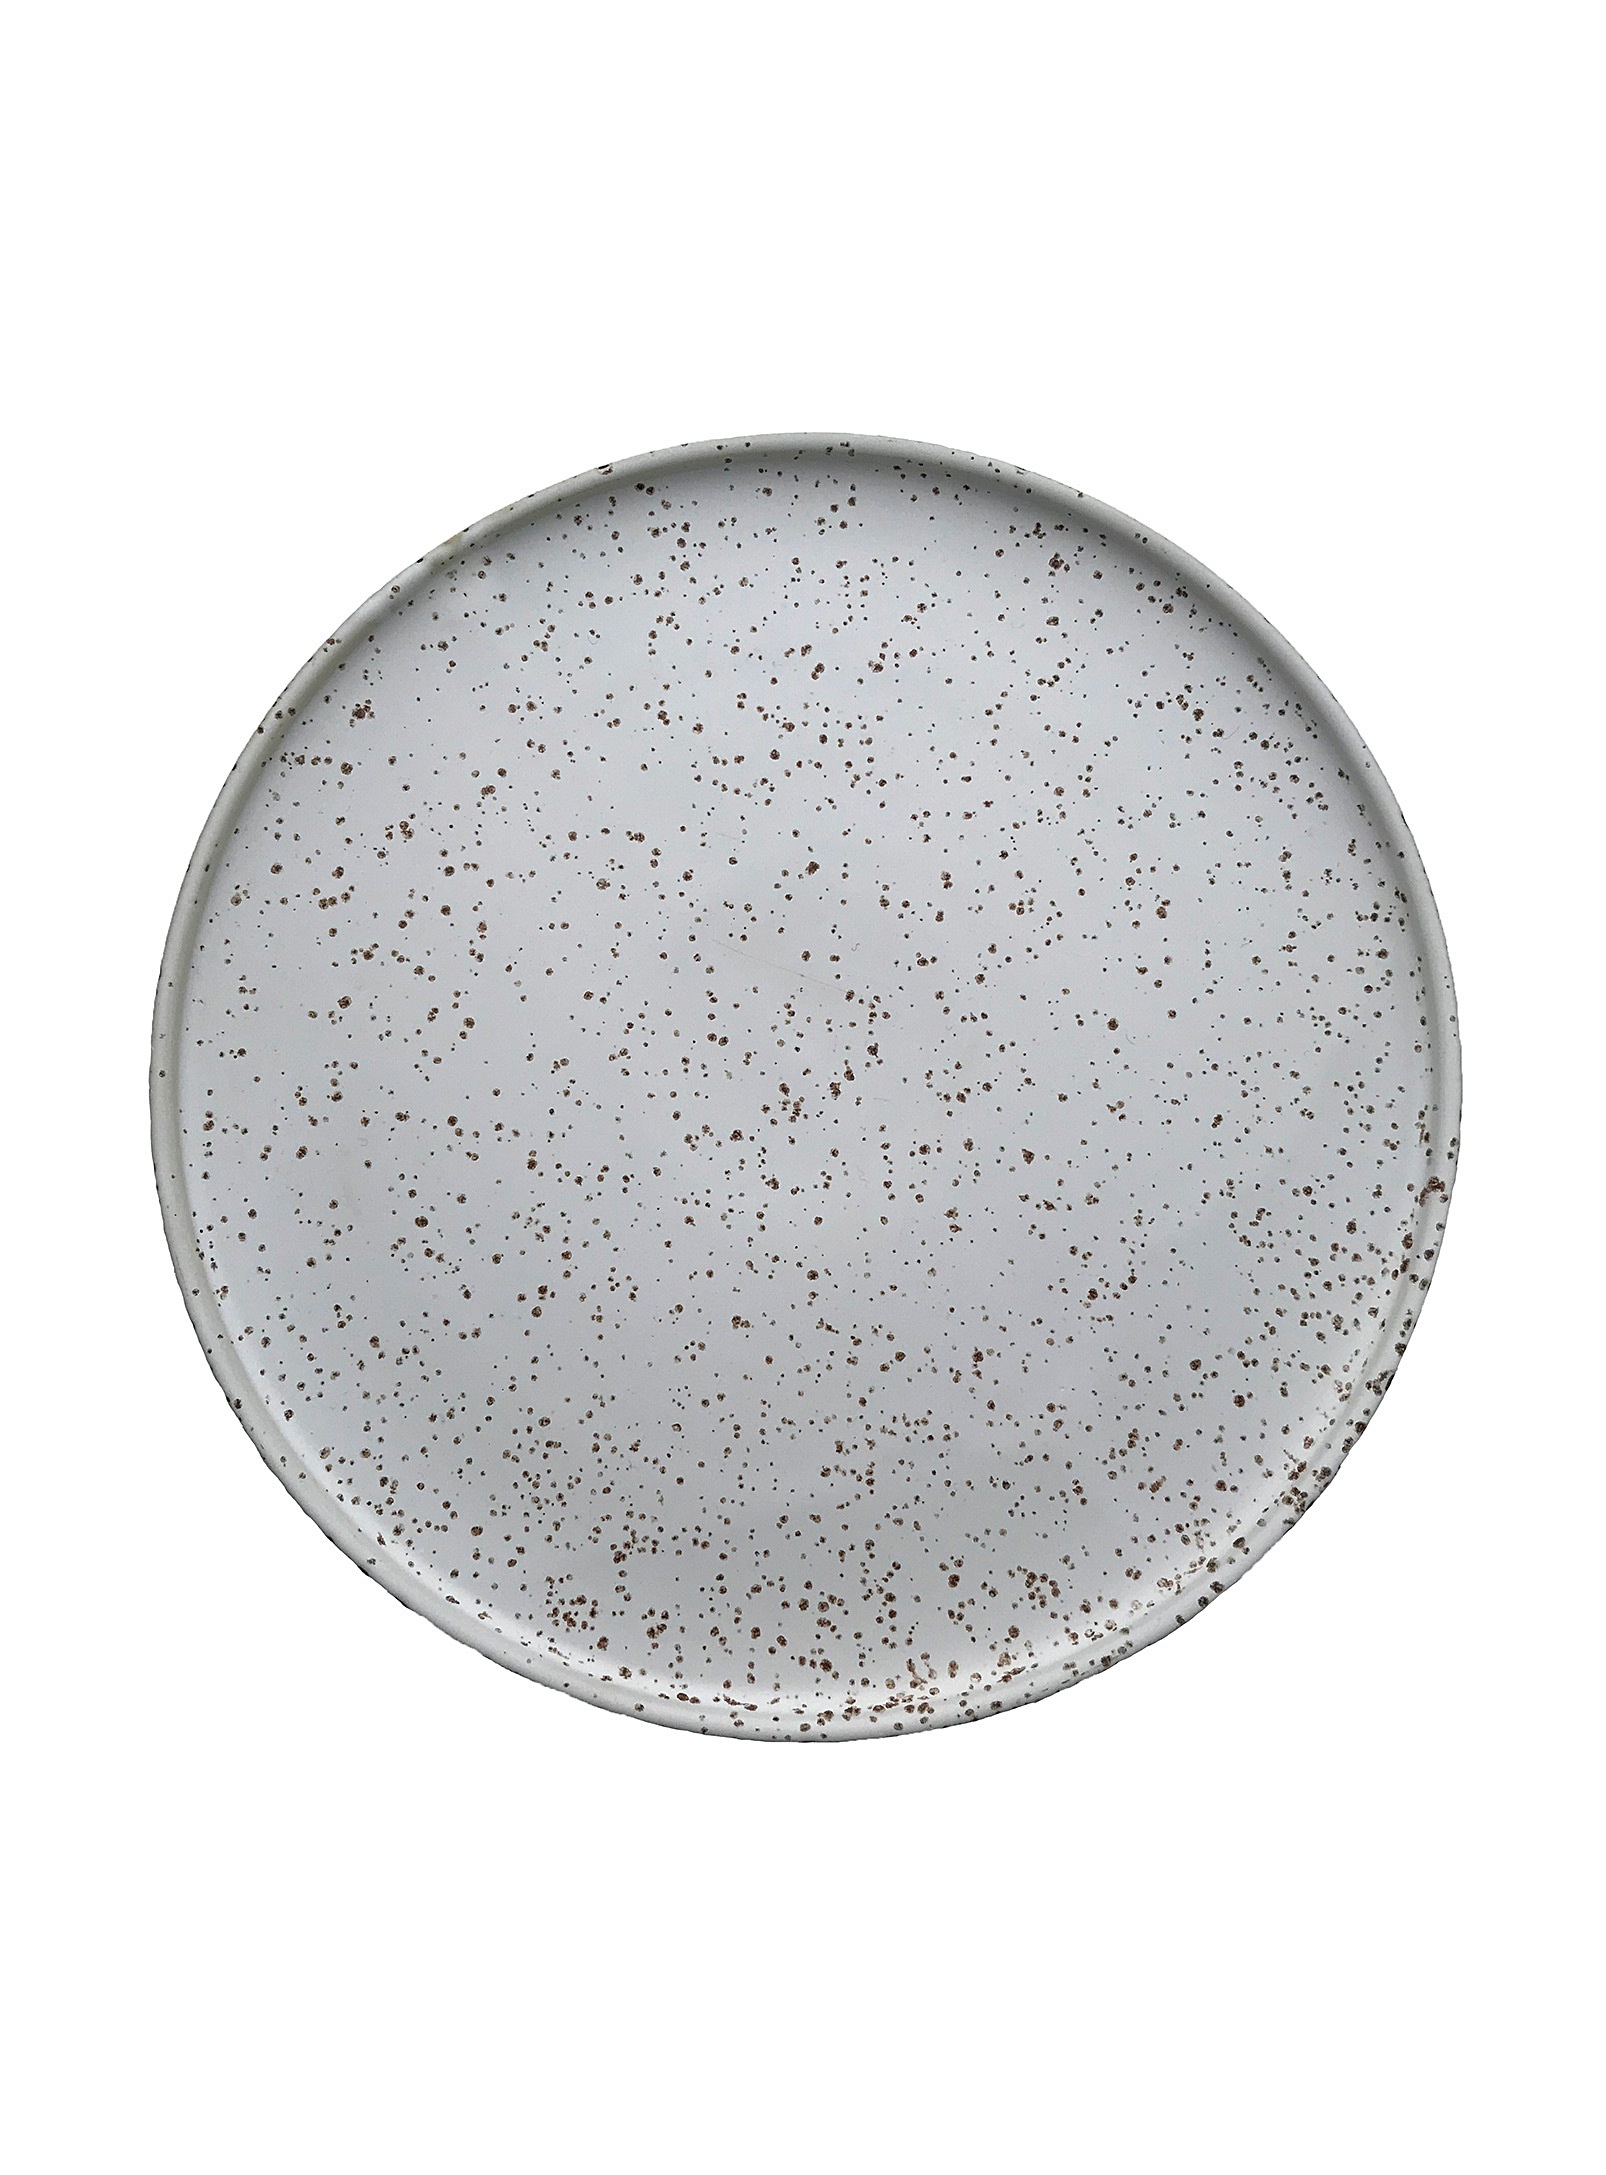 Oyoy Living Design Speckled Porcelain Plates Set Of 2 In Patterned White